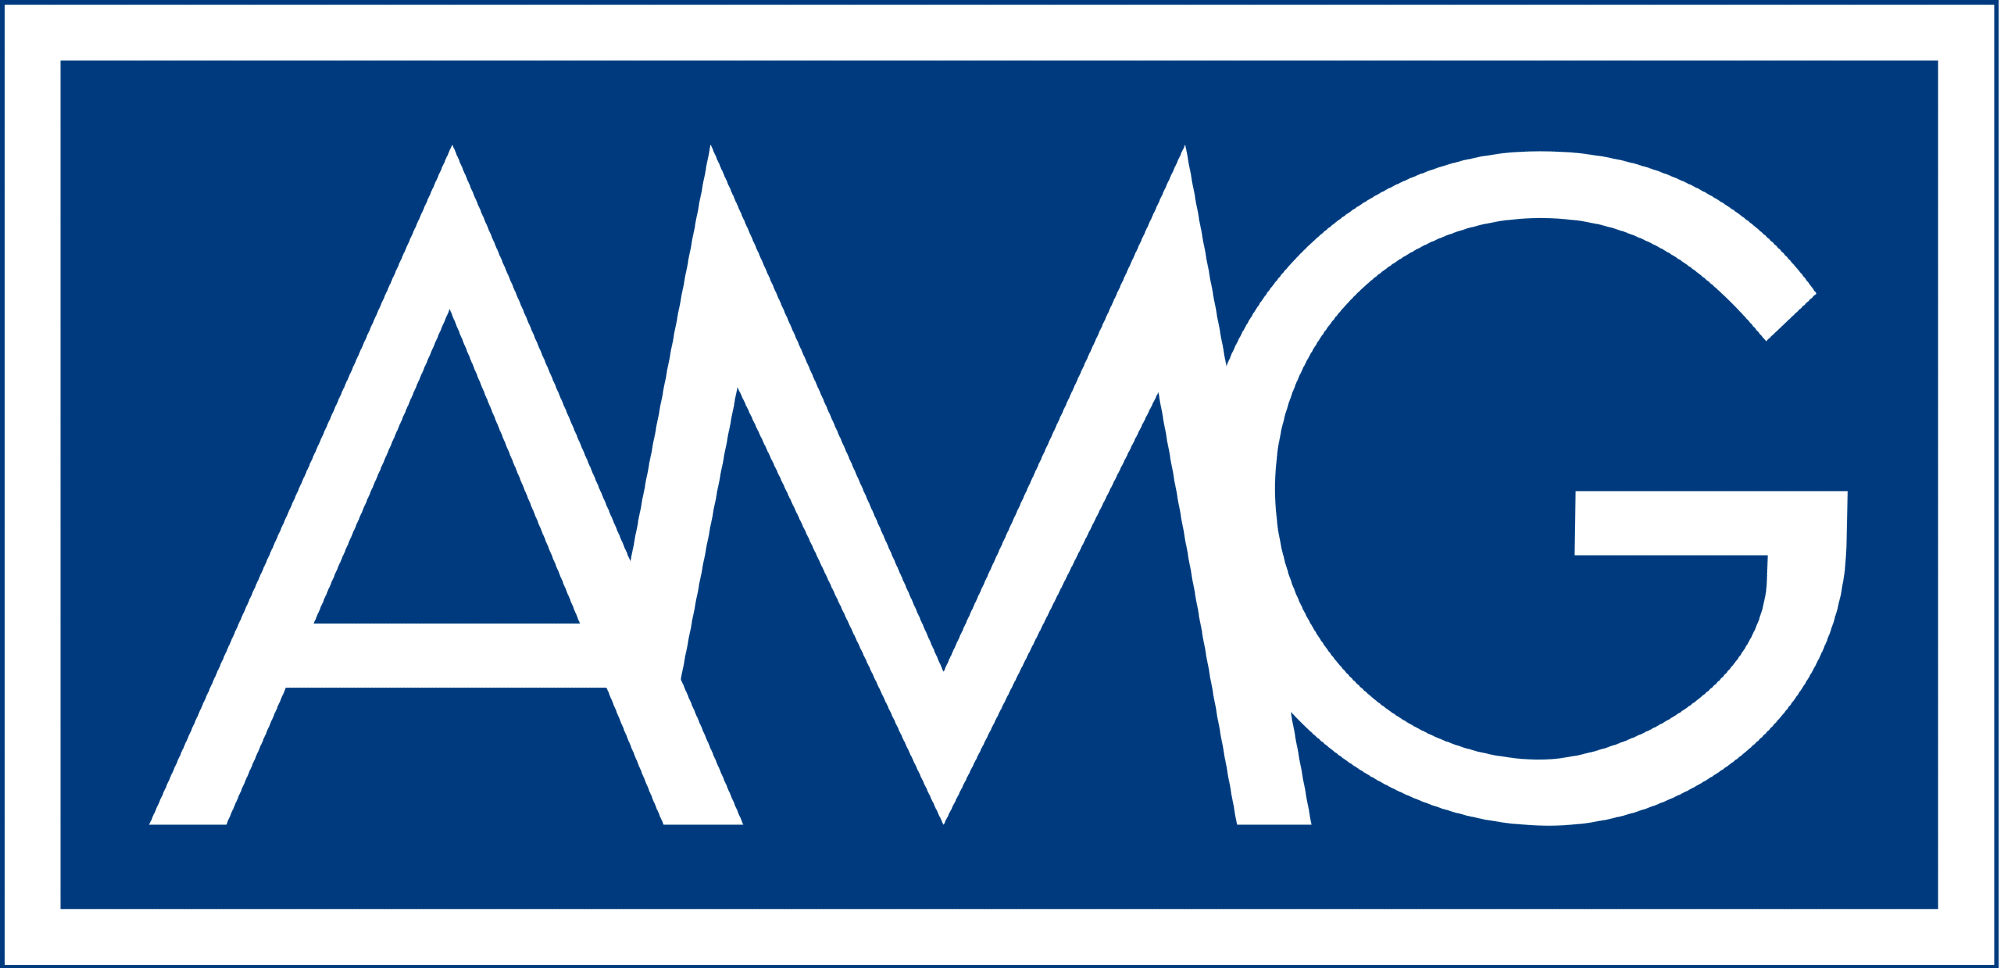 AMG Advanced Metallurgical Group N.V.